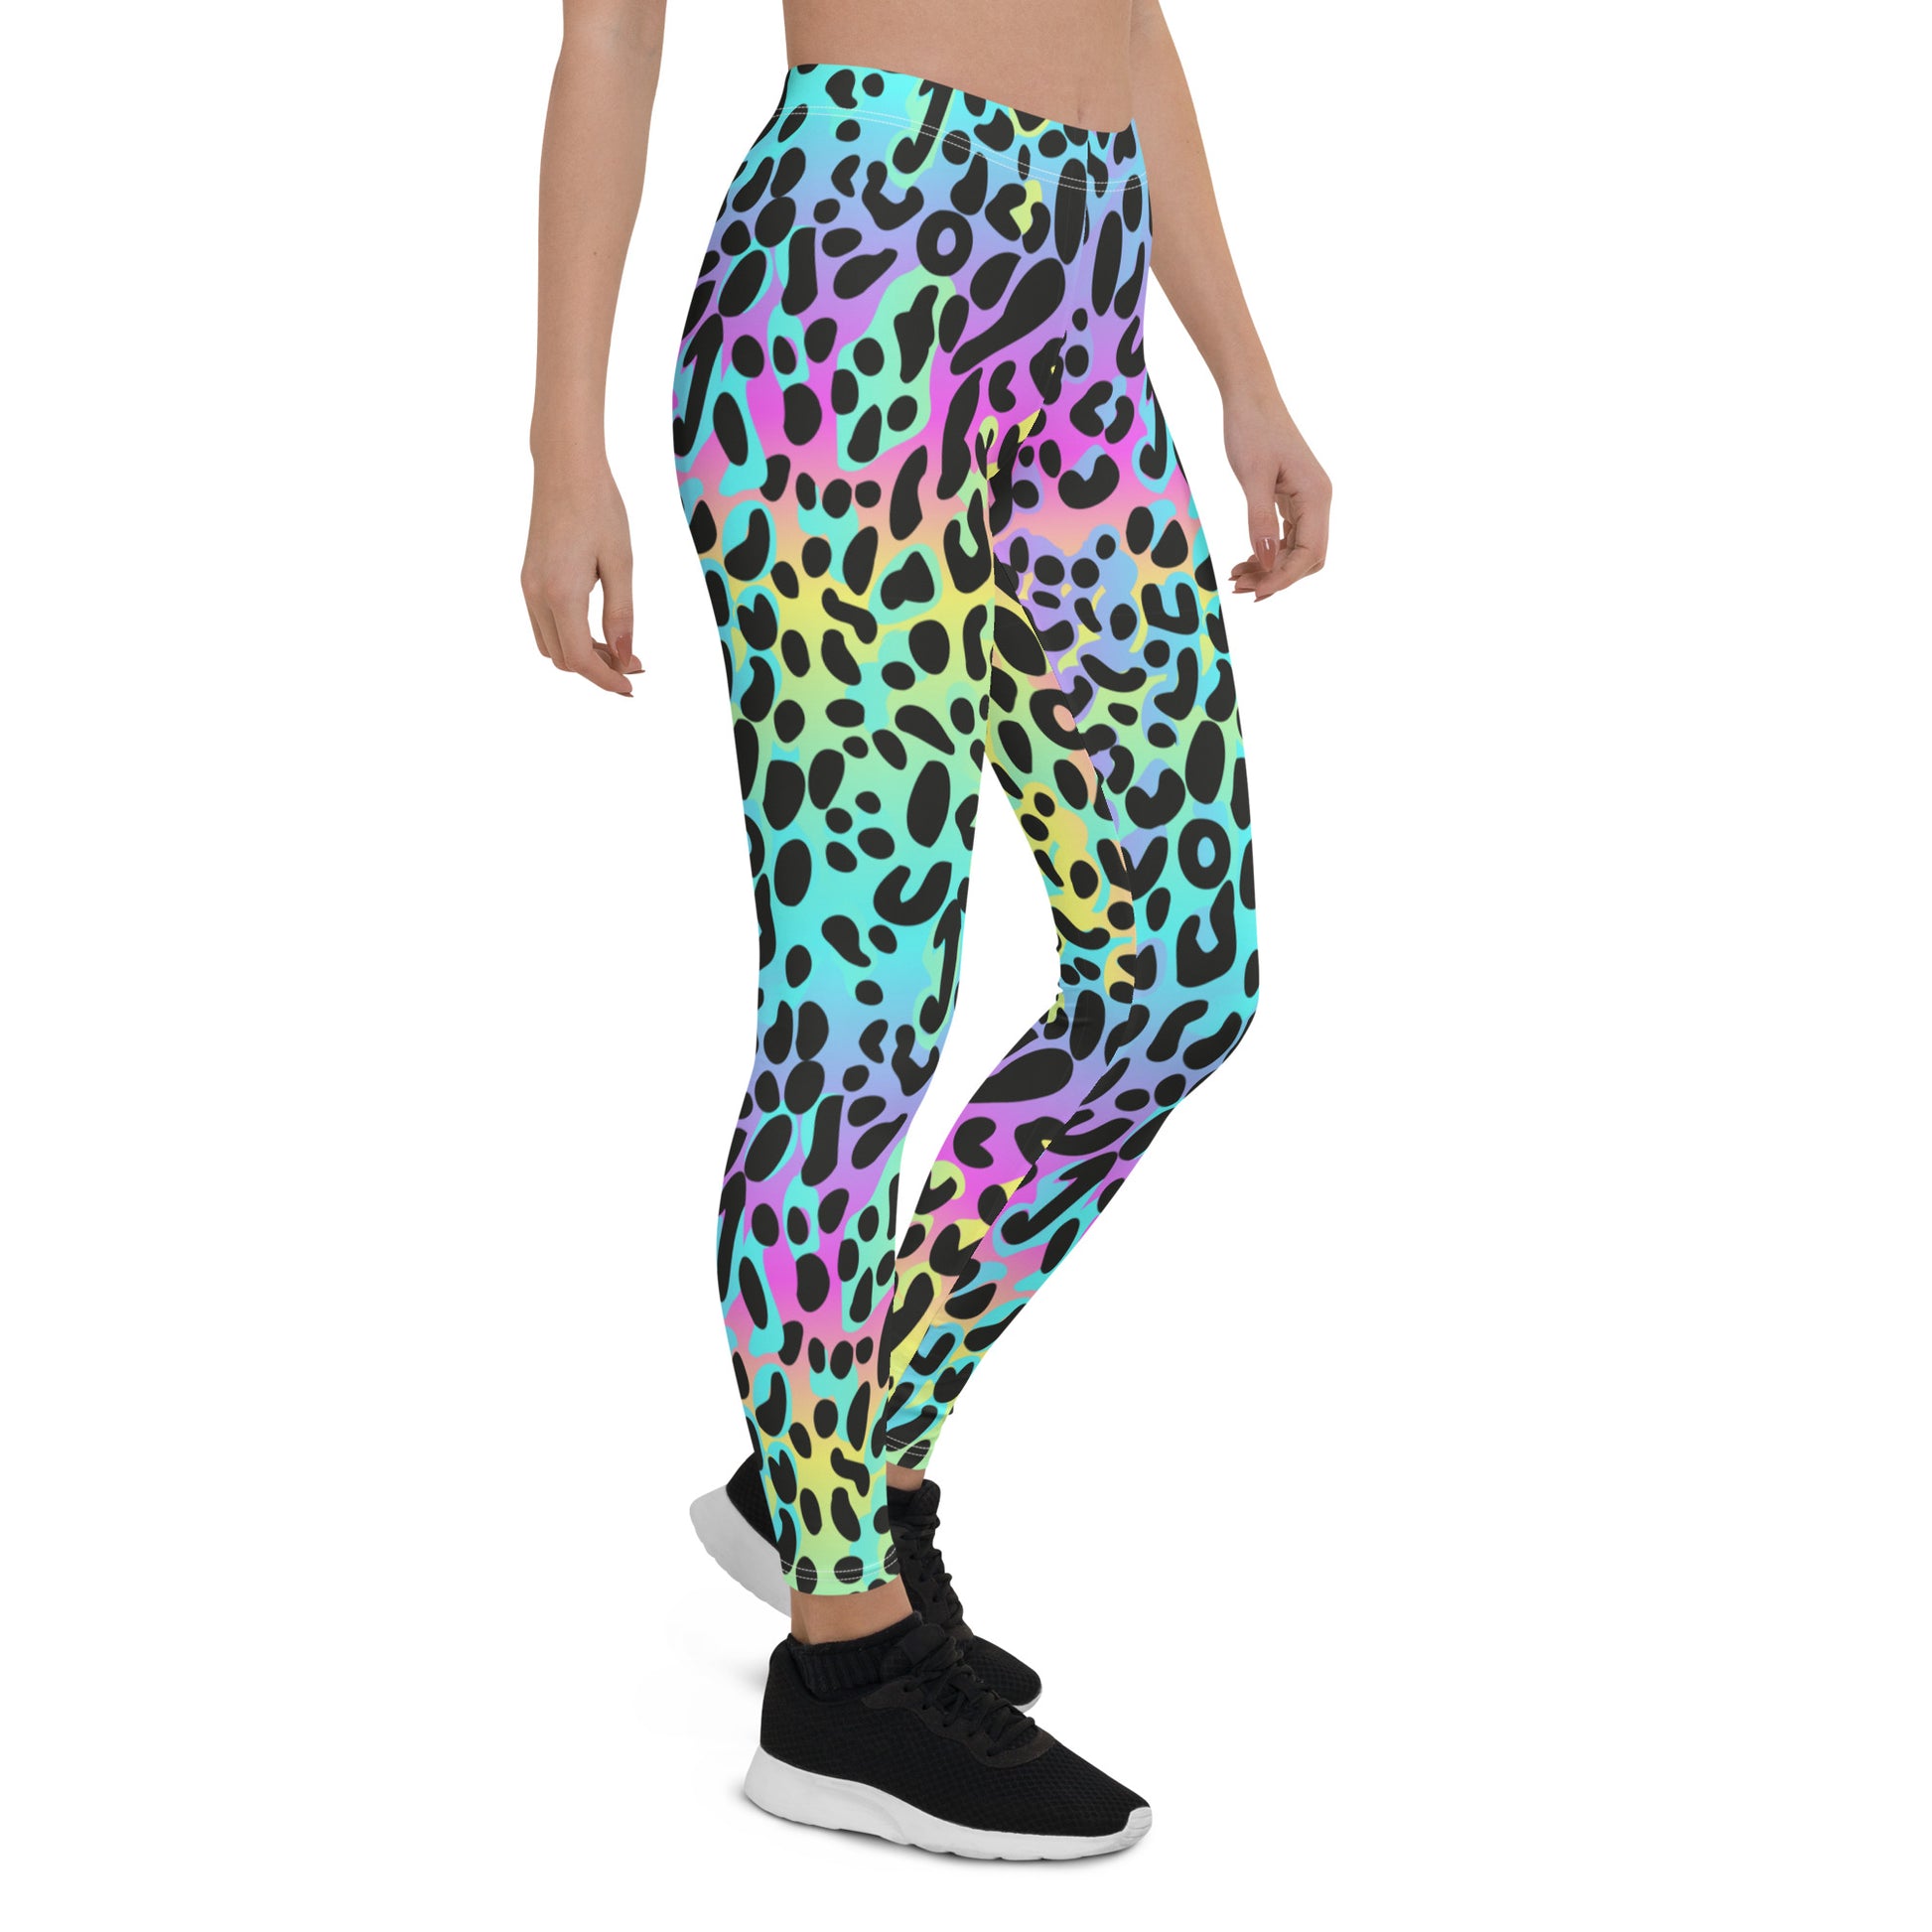 Rainbow Leopard Leggings Women, Animal Gradient Printed Yoga Pants Cute Graphic Workout Gym Fun Designer Tights Gift Starcove Fashion